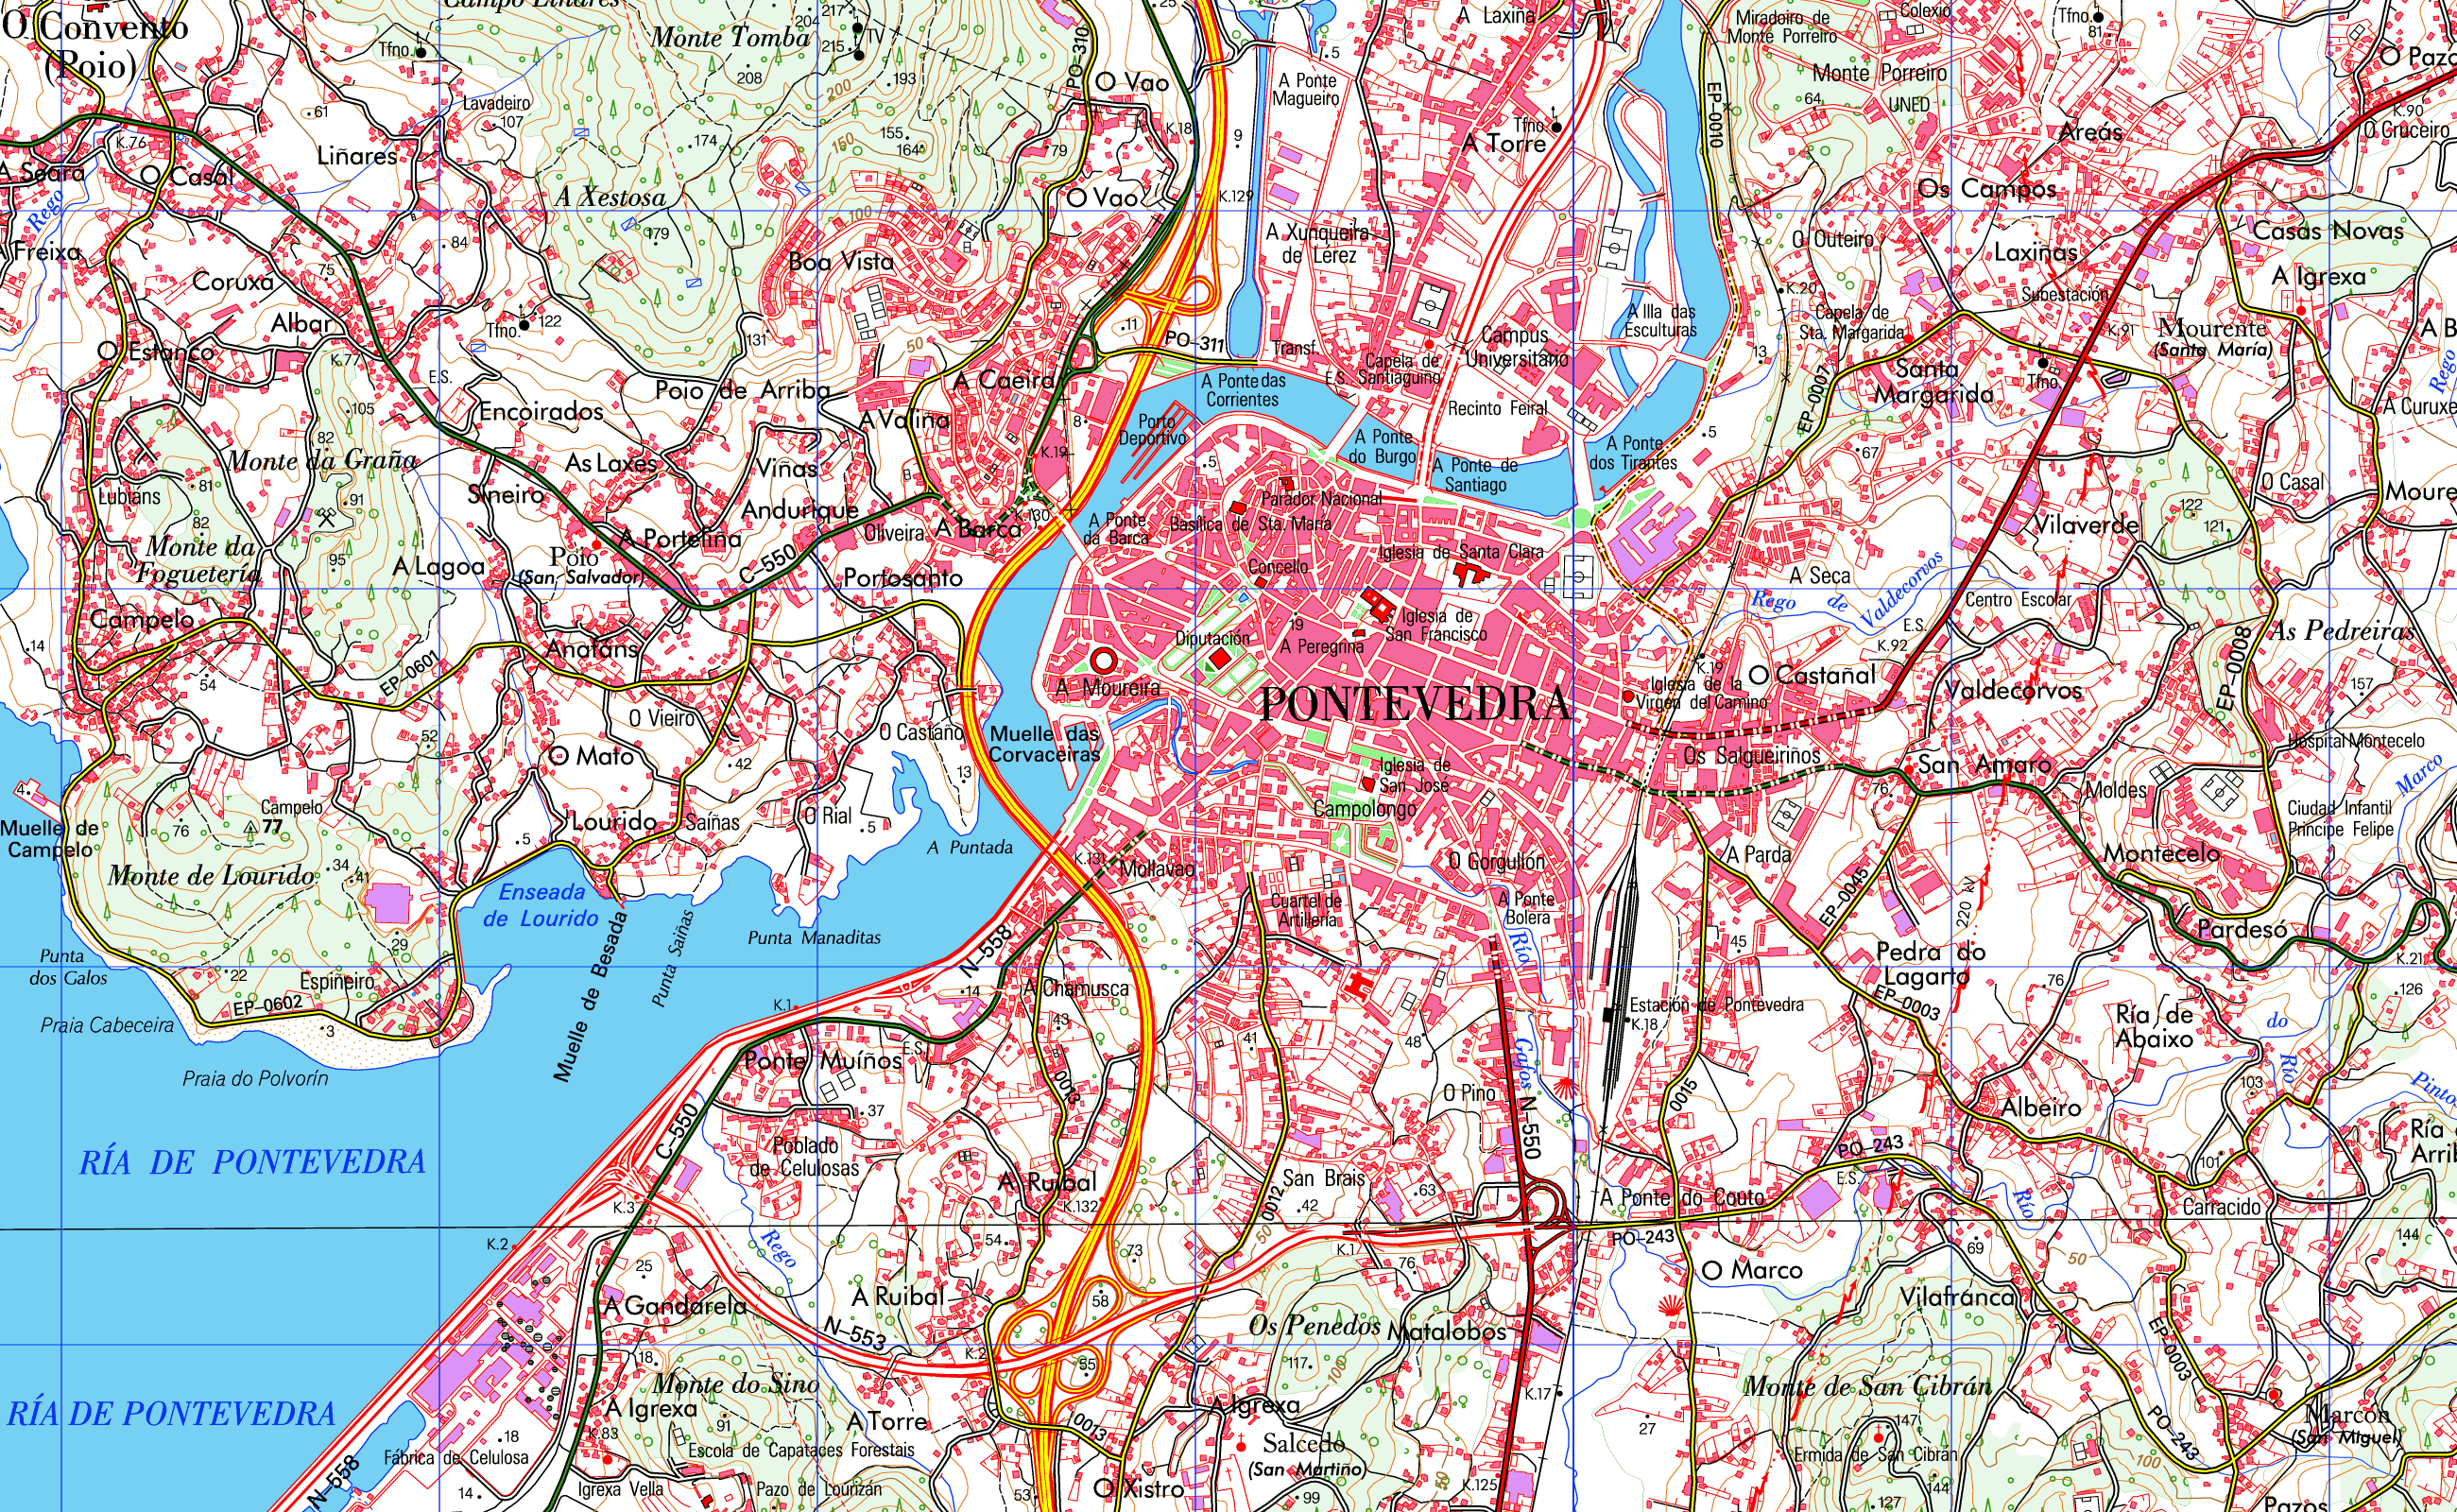 Pontevedra map - Full size | Gifex